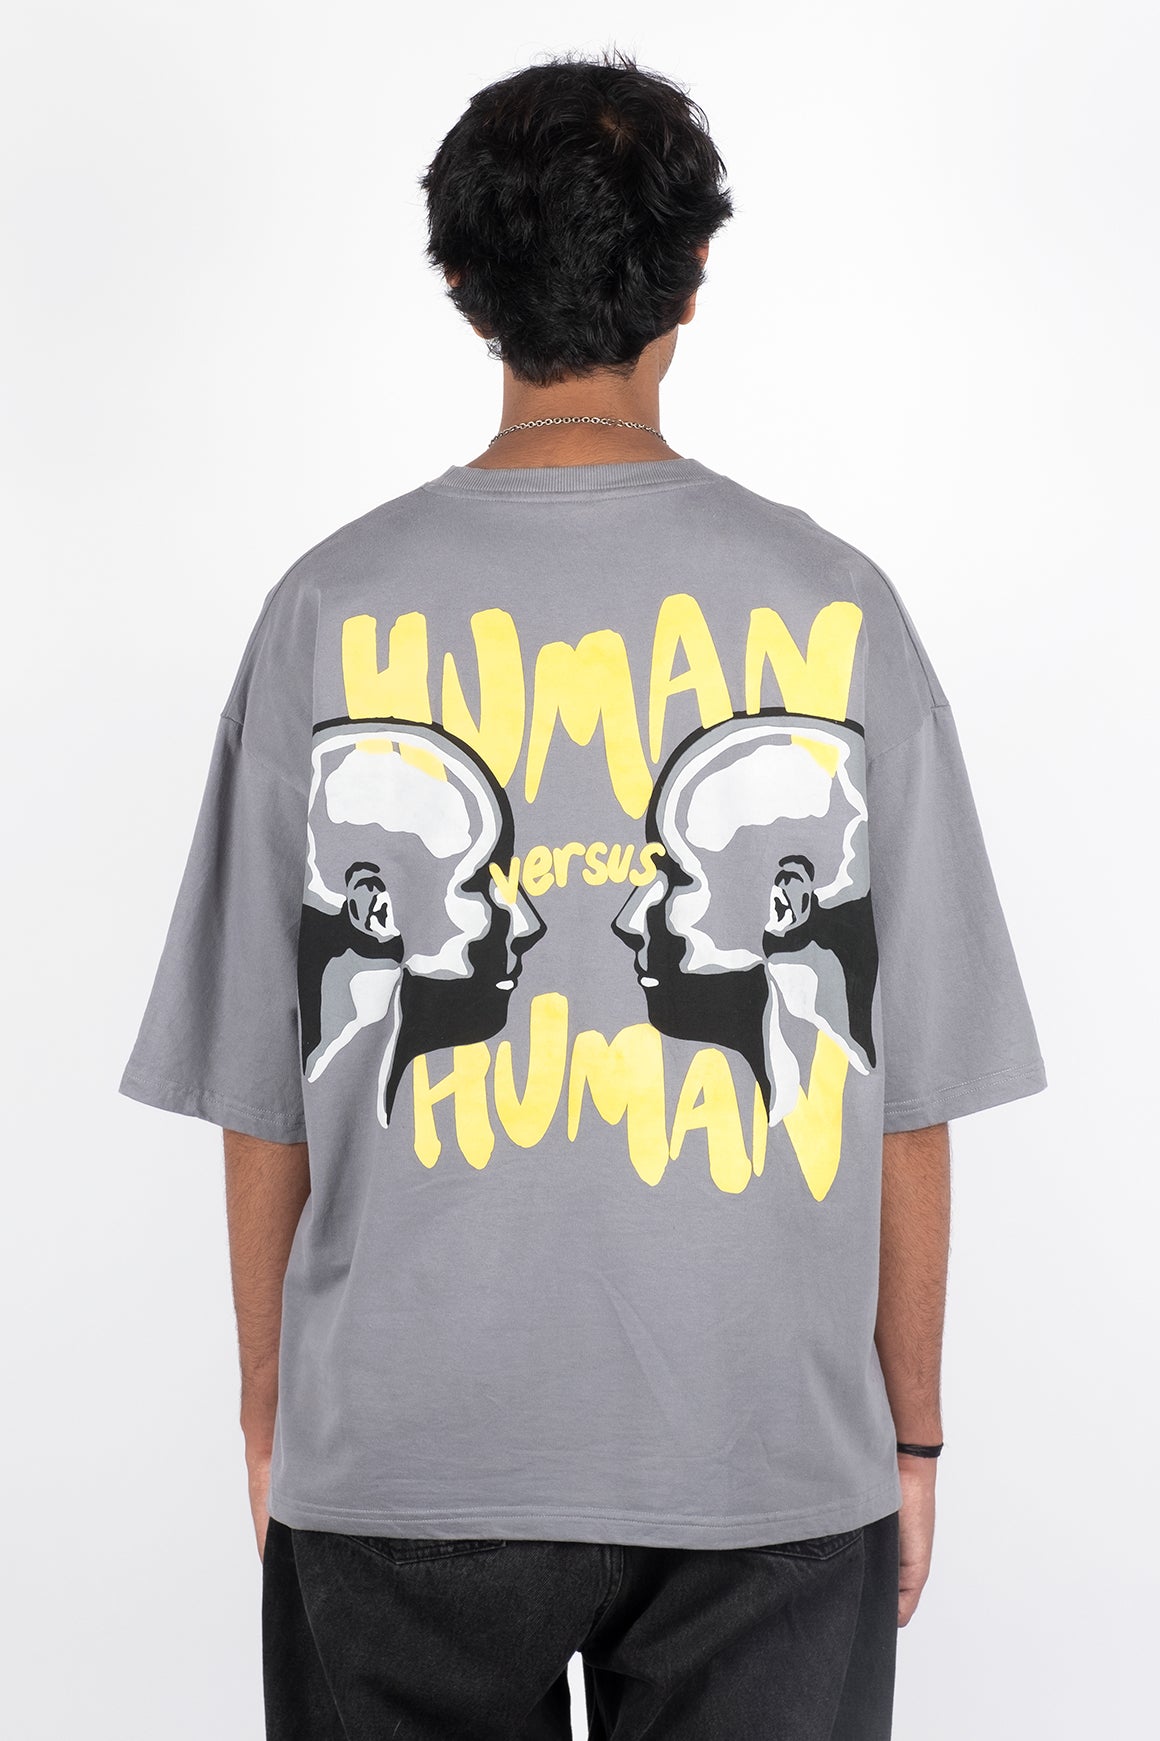 HUMAN VS HUMAN T-SHIRT